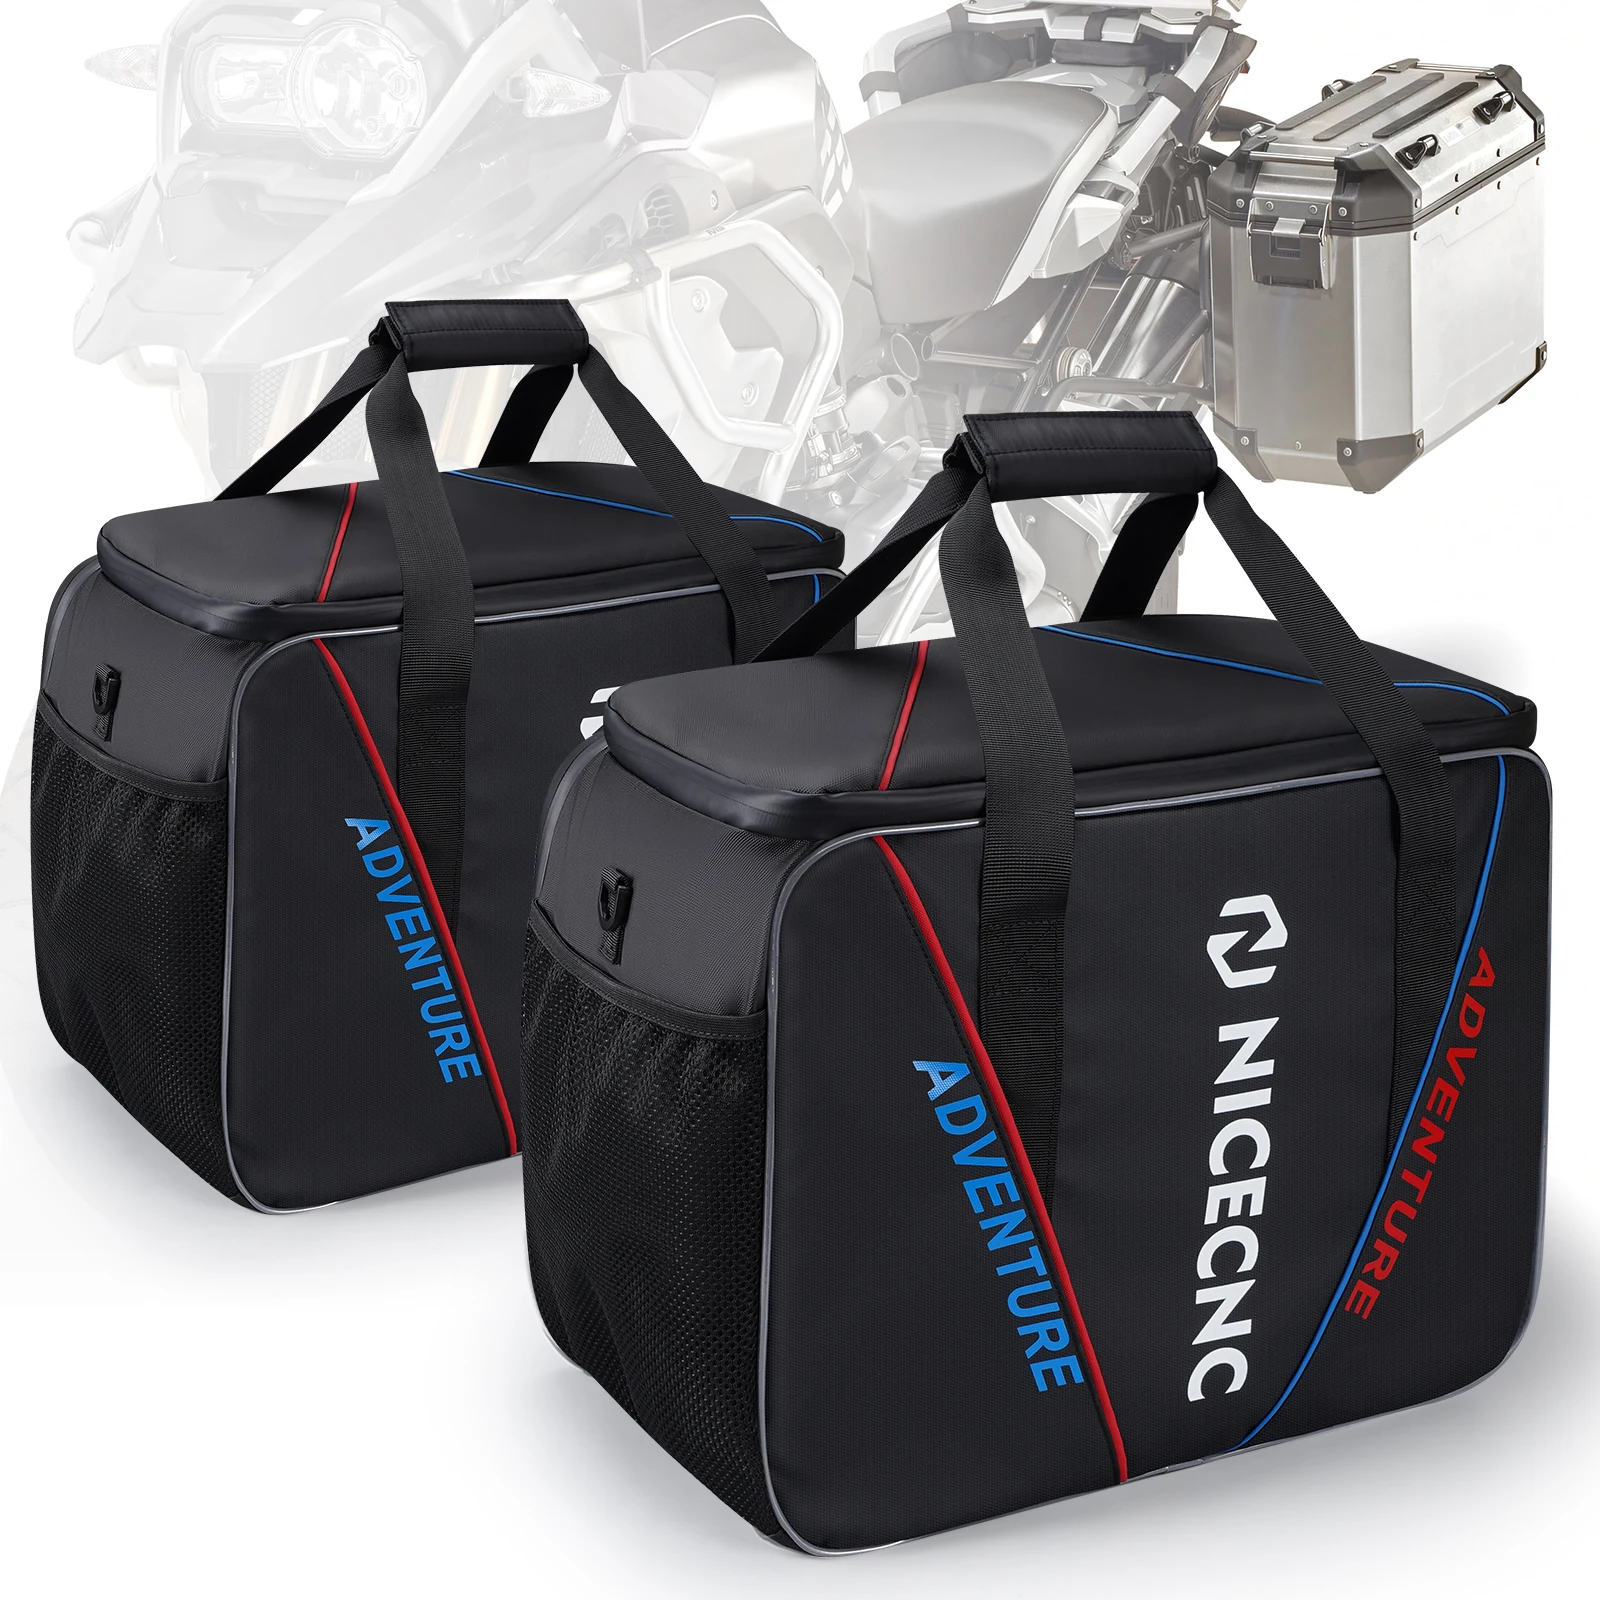 

Багажная сумка NICECNC для мотоцикла, внутренняя Боковая Сумка, водонепроницаемая багажная подкладка для мотоцикла, сумка для BMW R1200GS R1250GS LC ADV 2004-2022